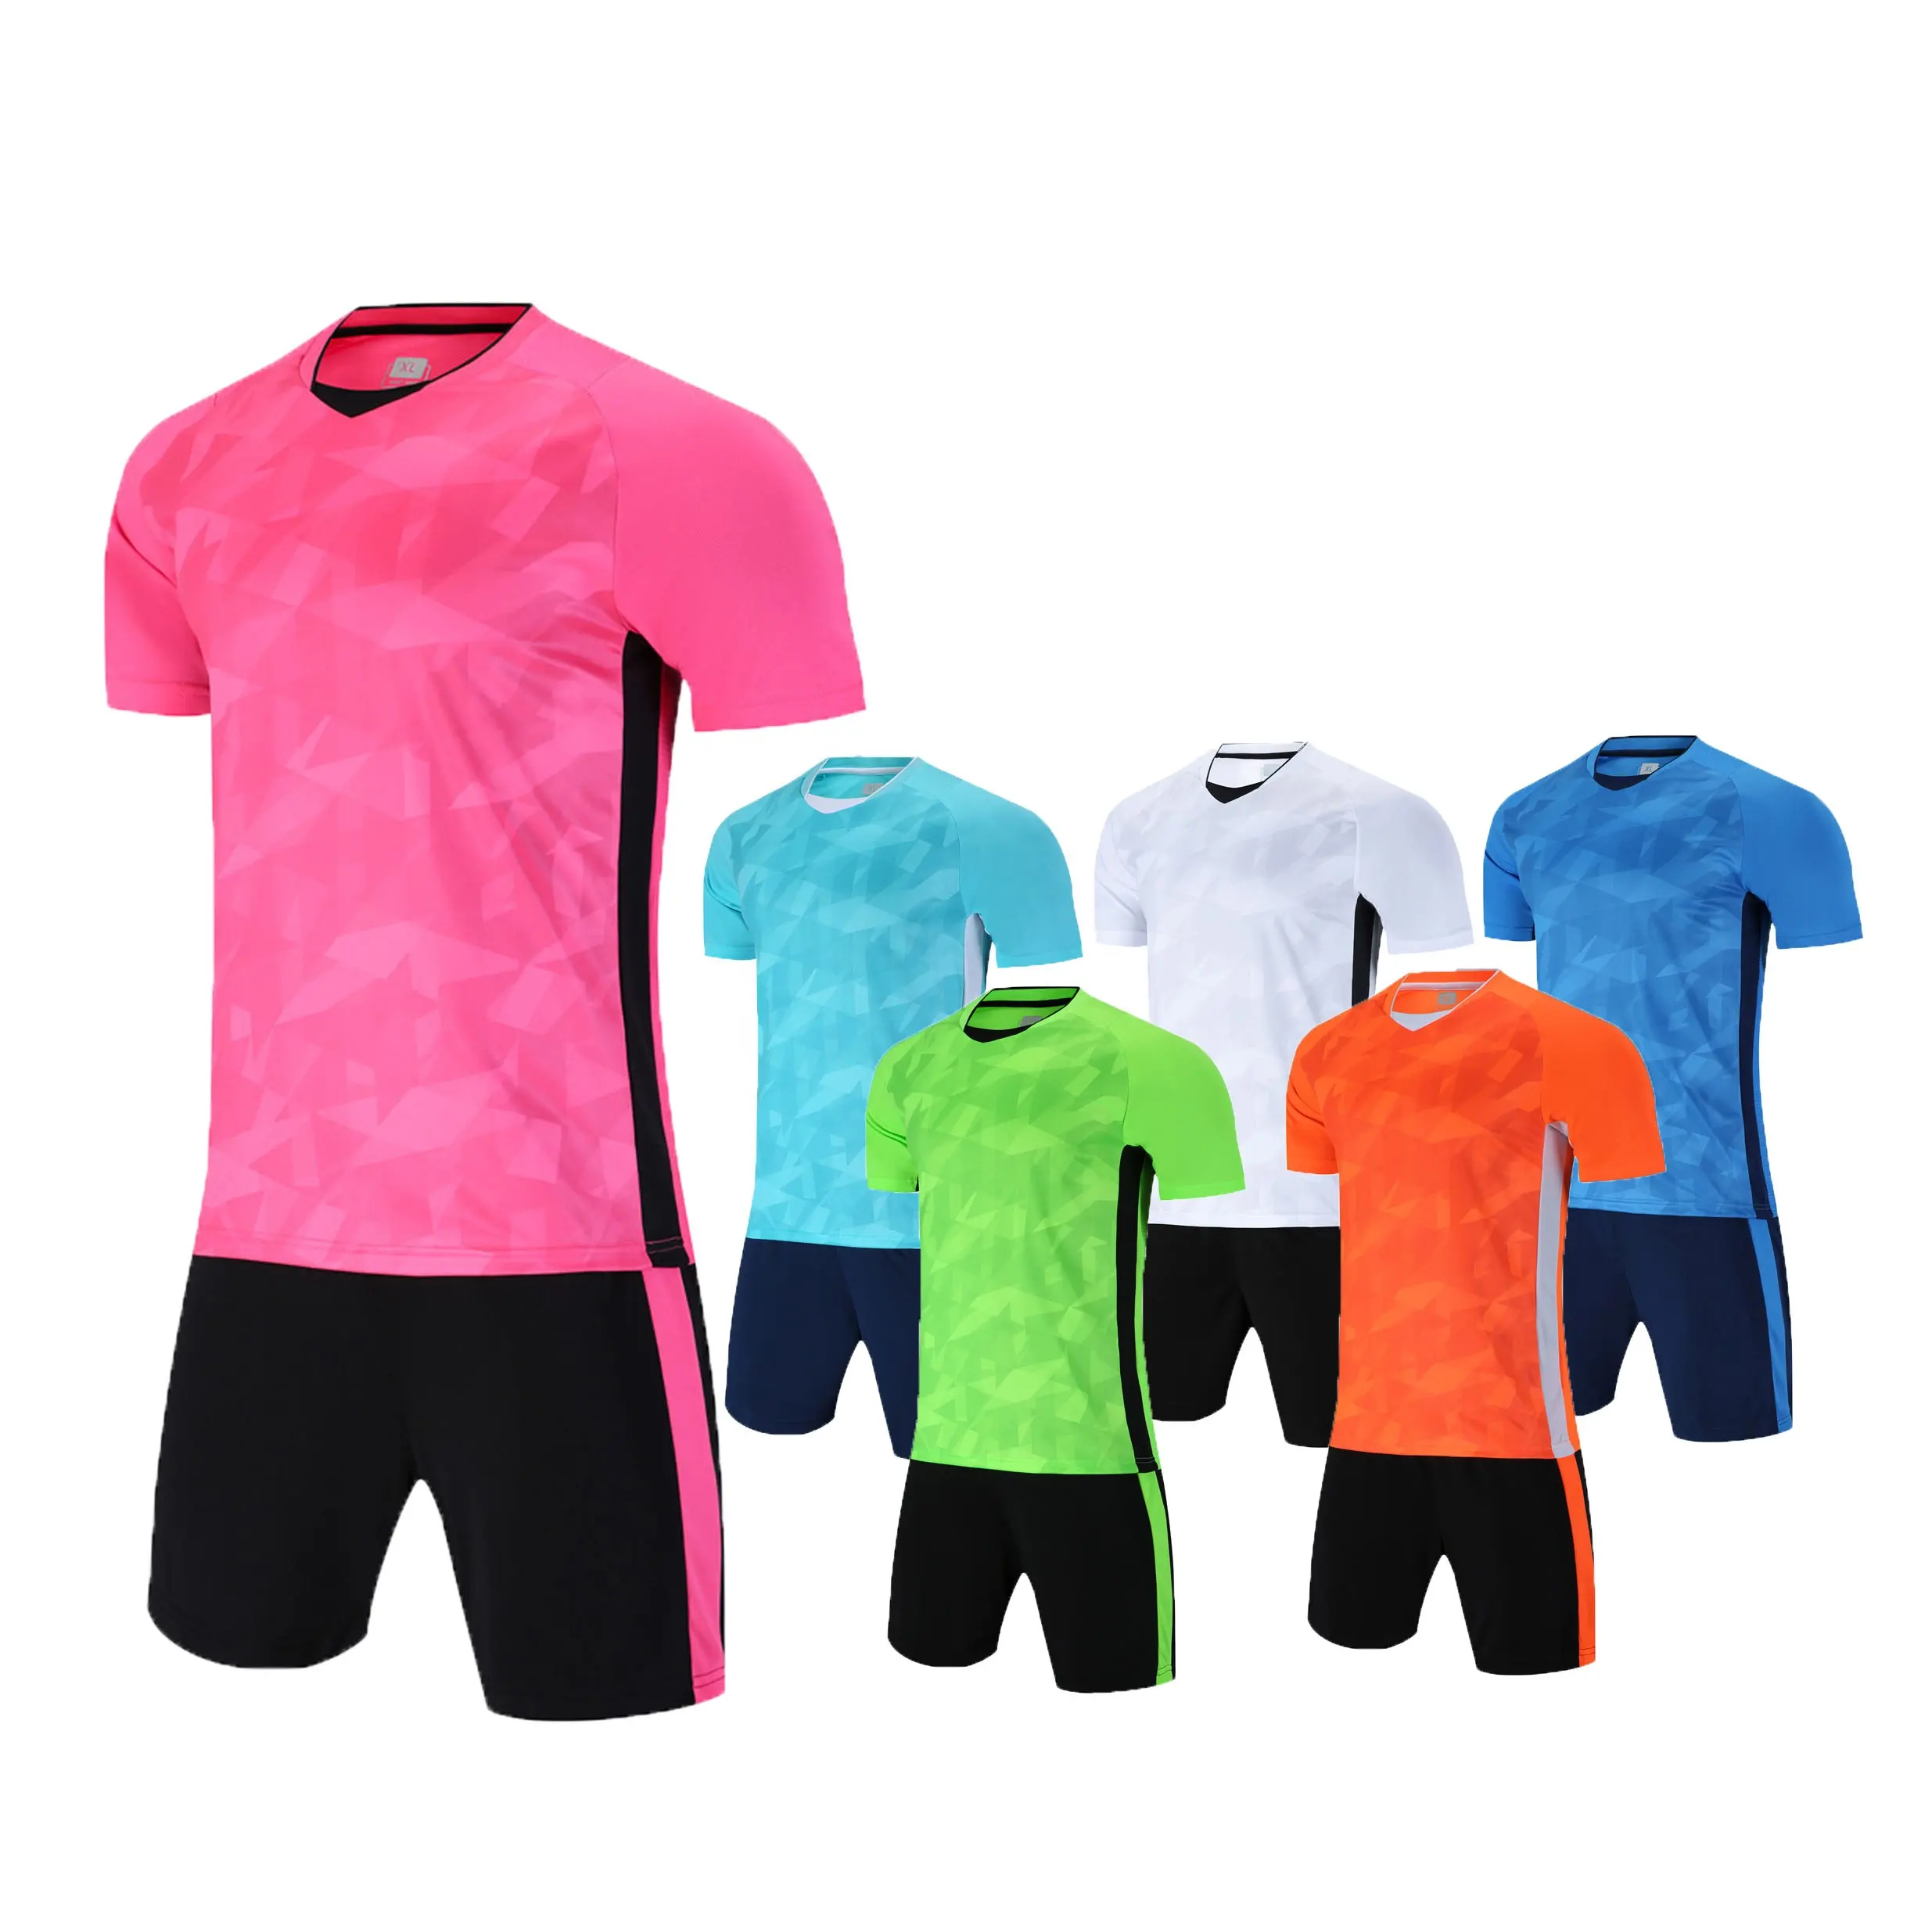 Camisa de futebol de poliéster 100%, modelo rosa